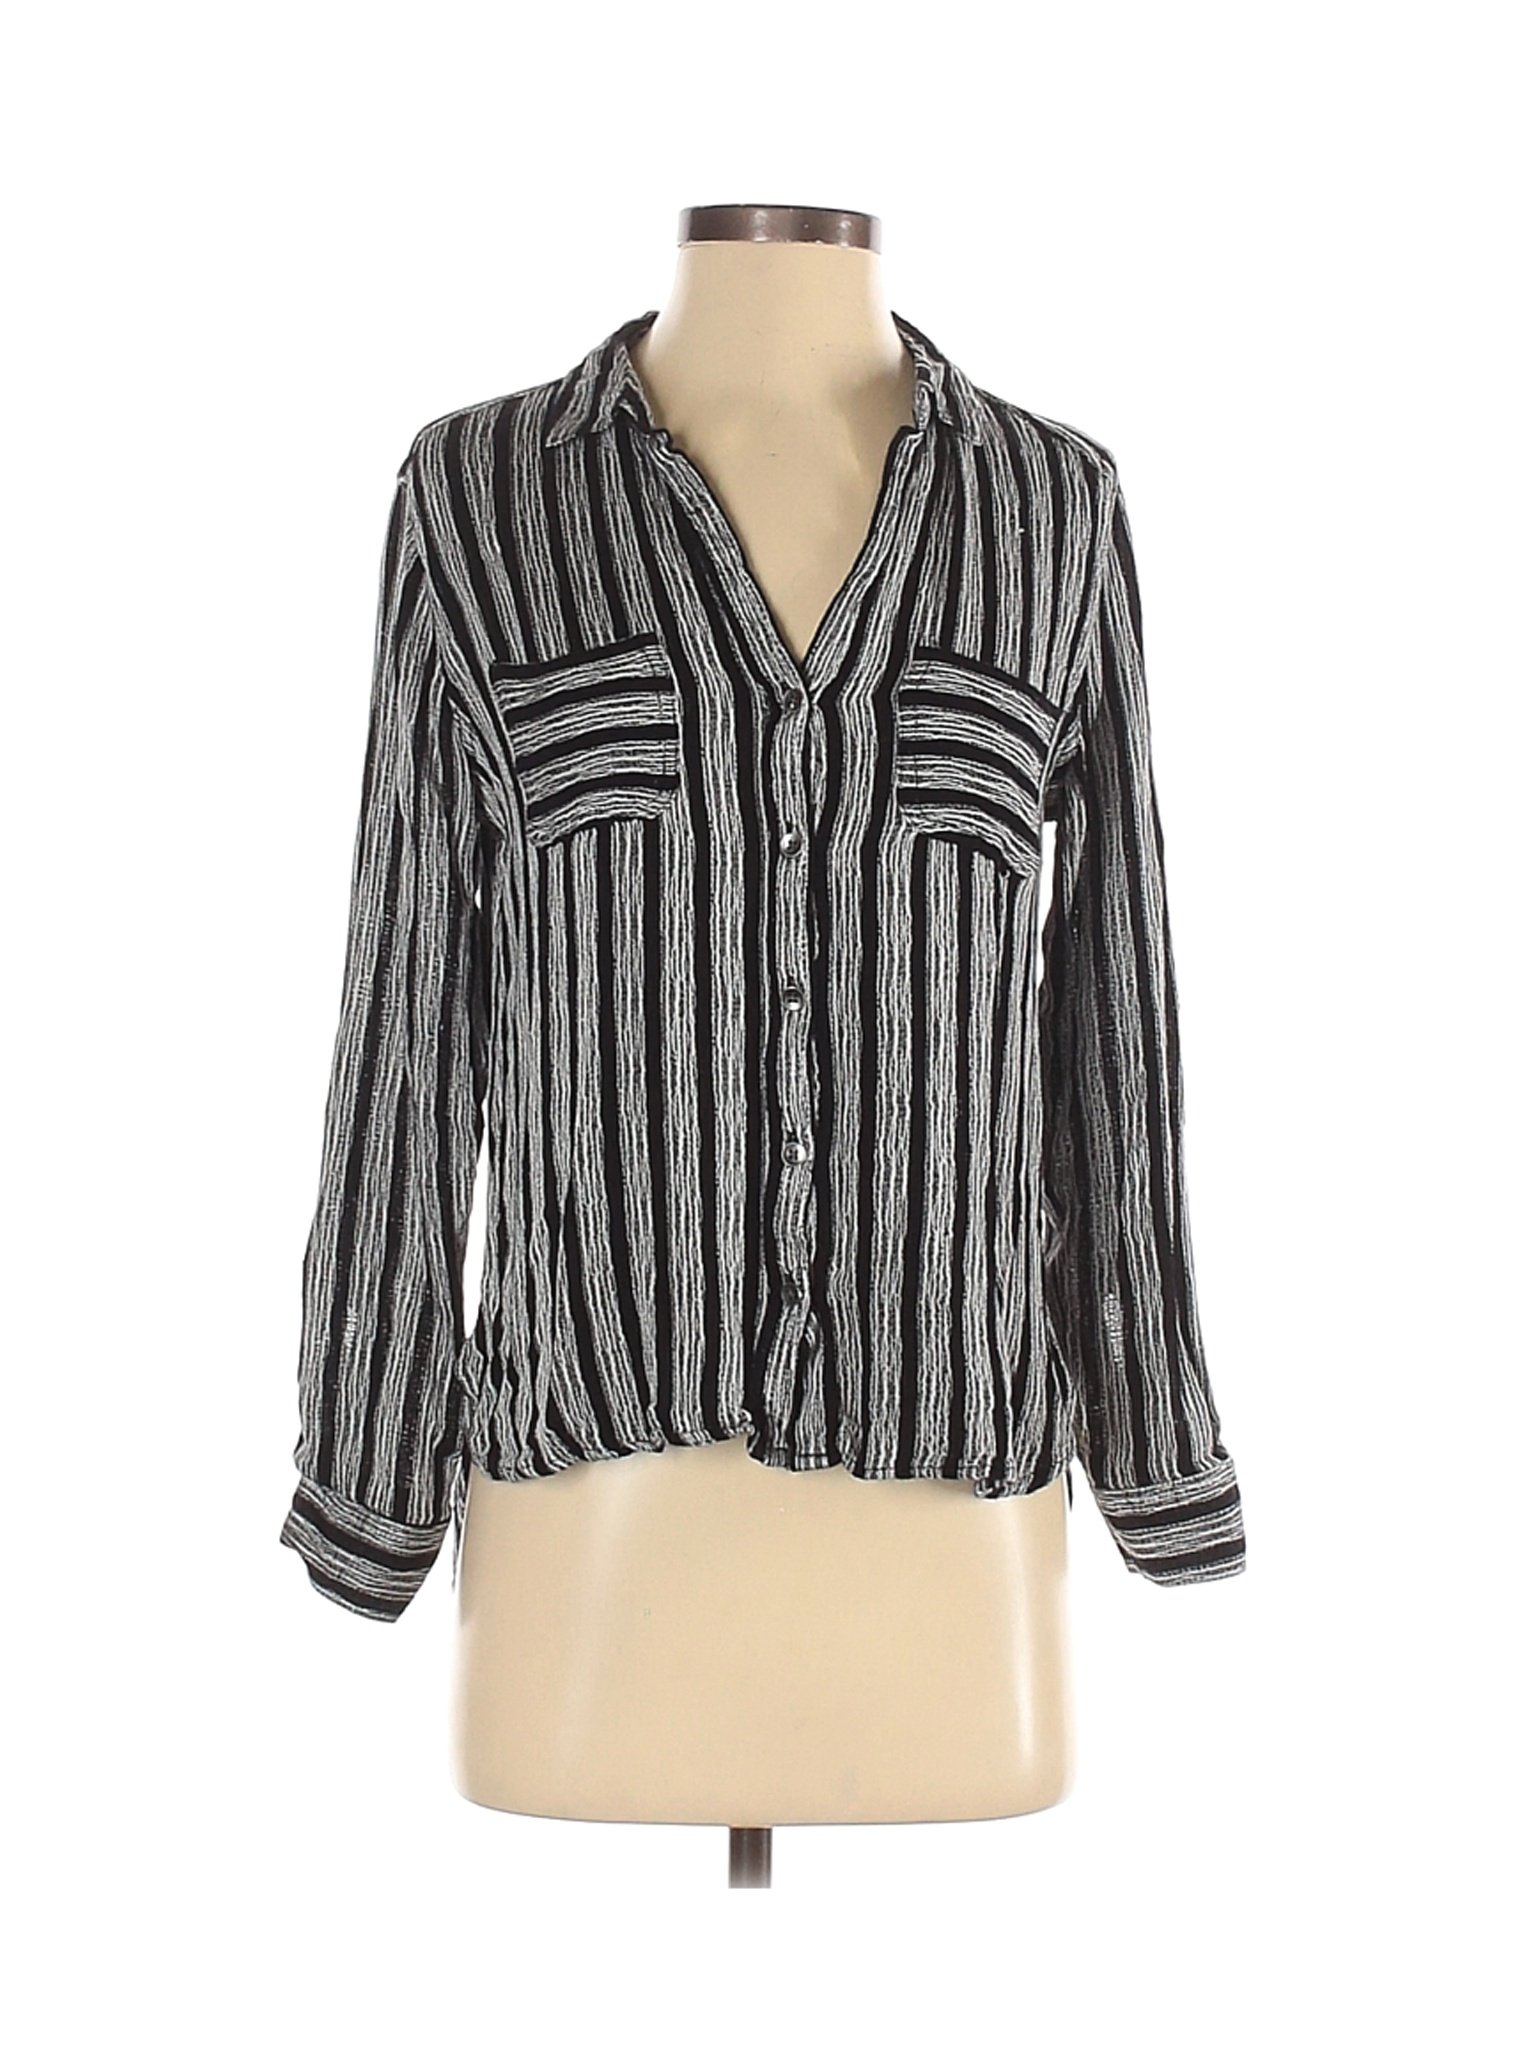 Rock & Republic Women Black 3/4 Sleeve Button-Down Shirt S | eBay